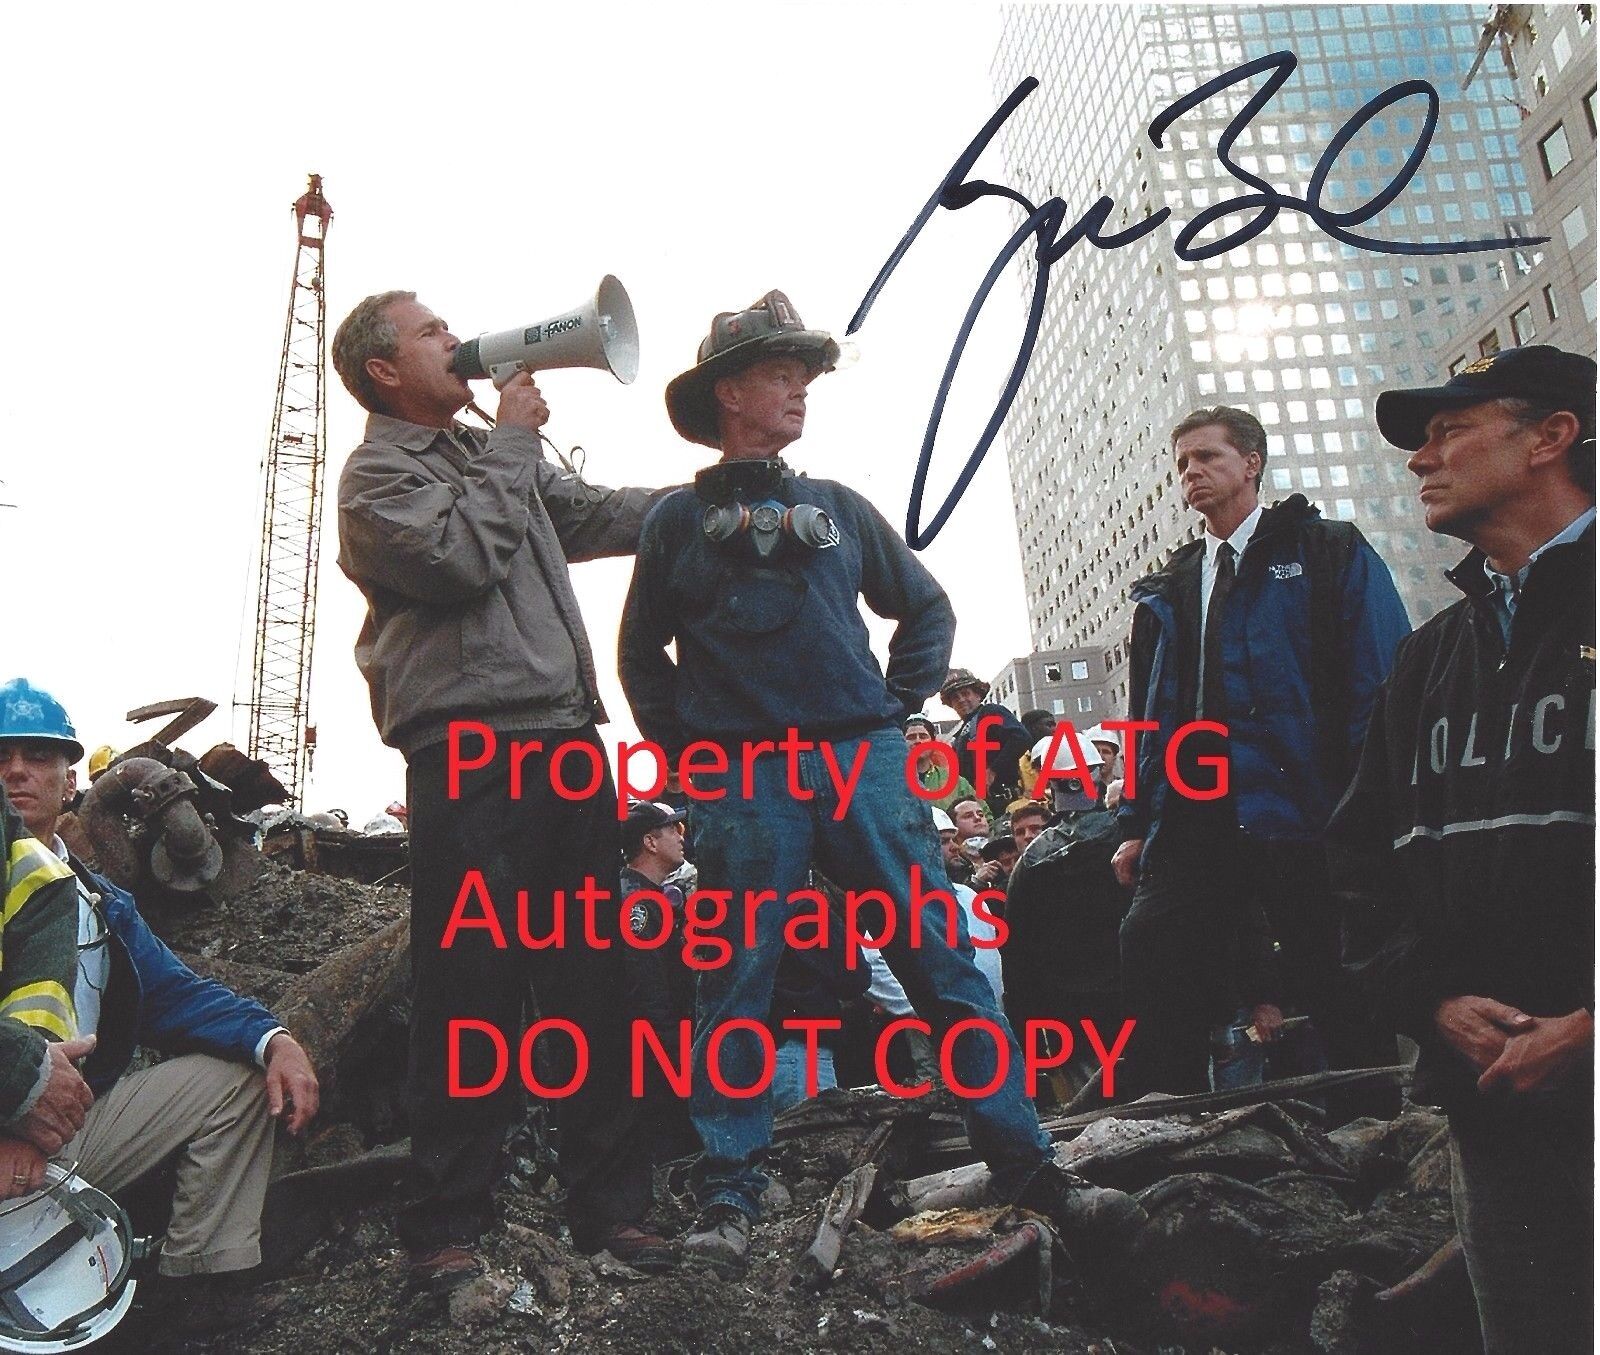 PRESIDENT GEORGE W BUSH SIGNED 9/11 GROUND ZERO BULLHORN REPRINT 8x10 Photo Poster painting RP